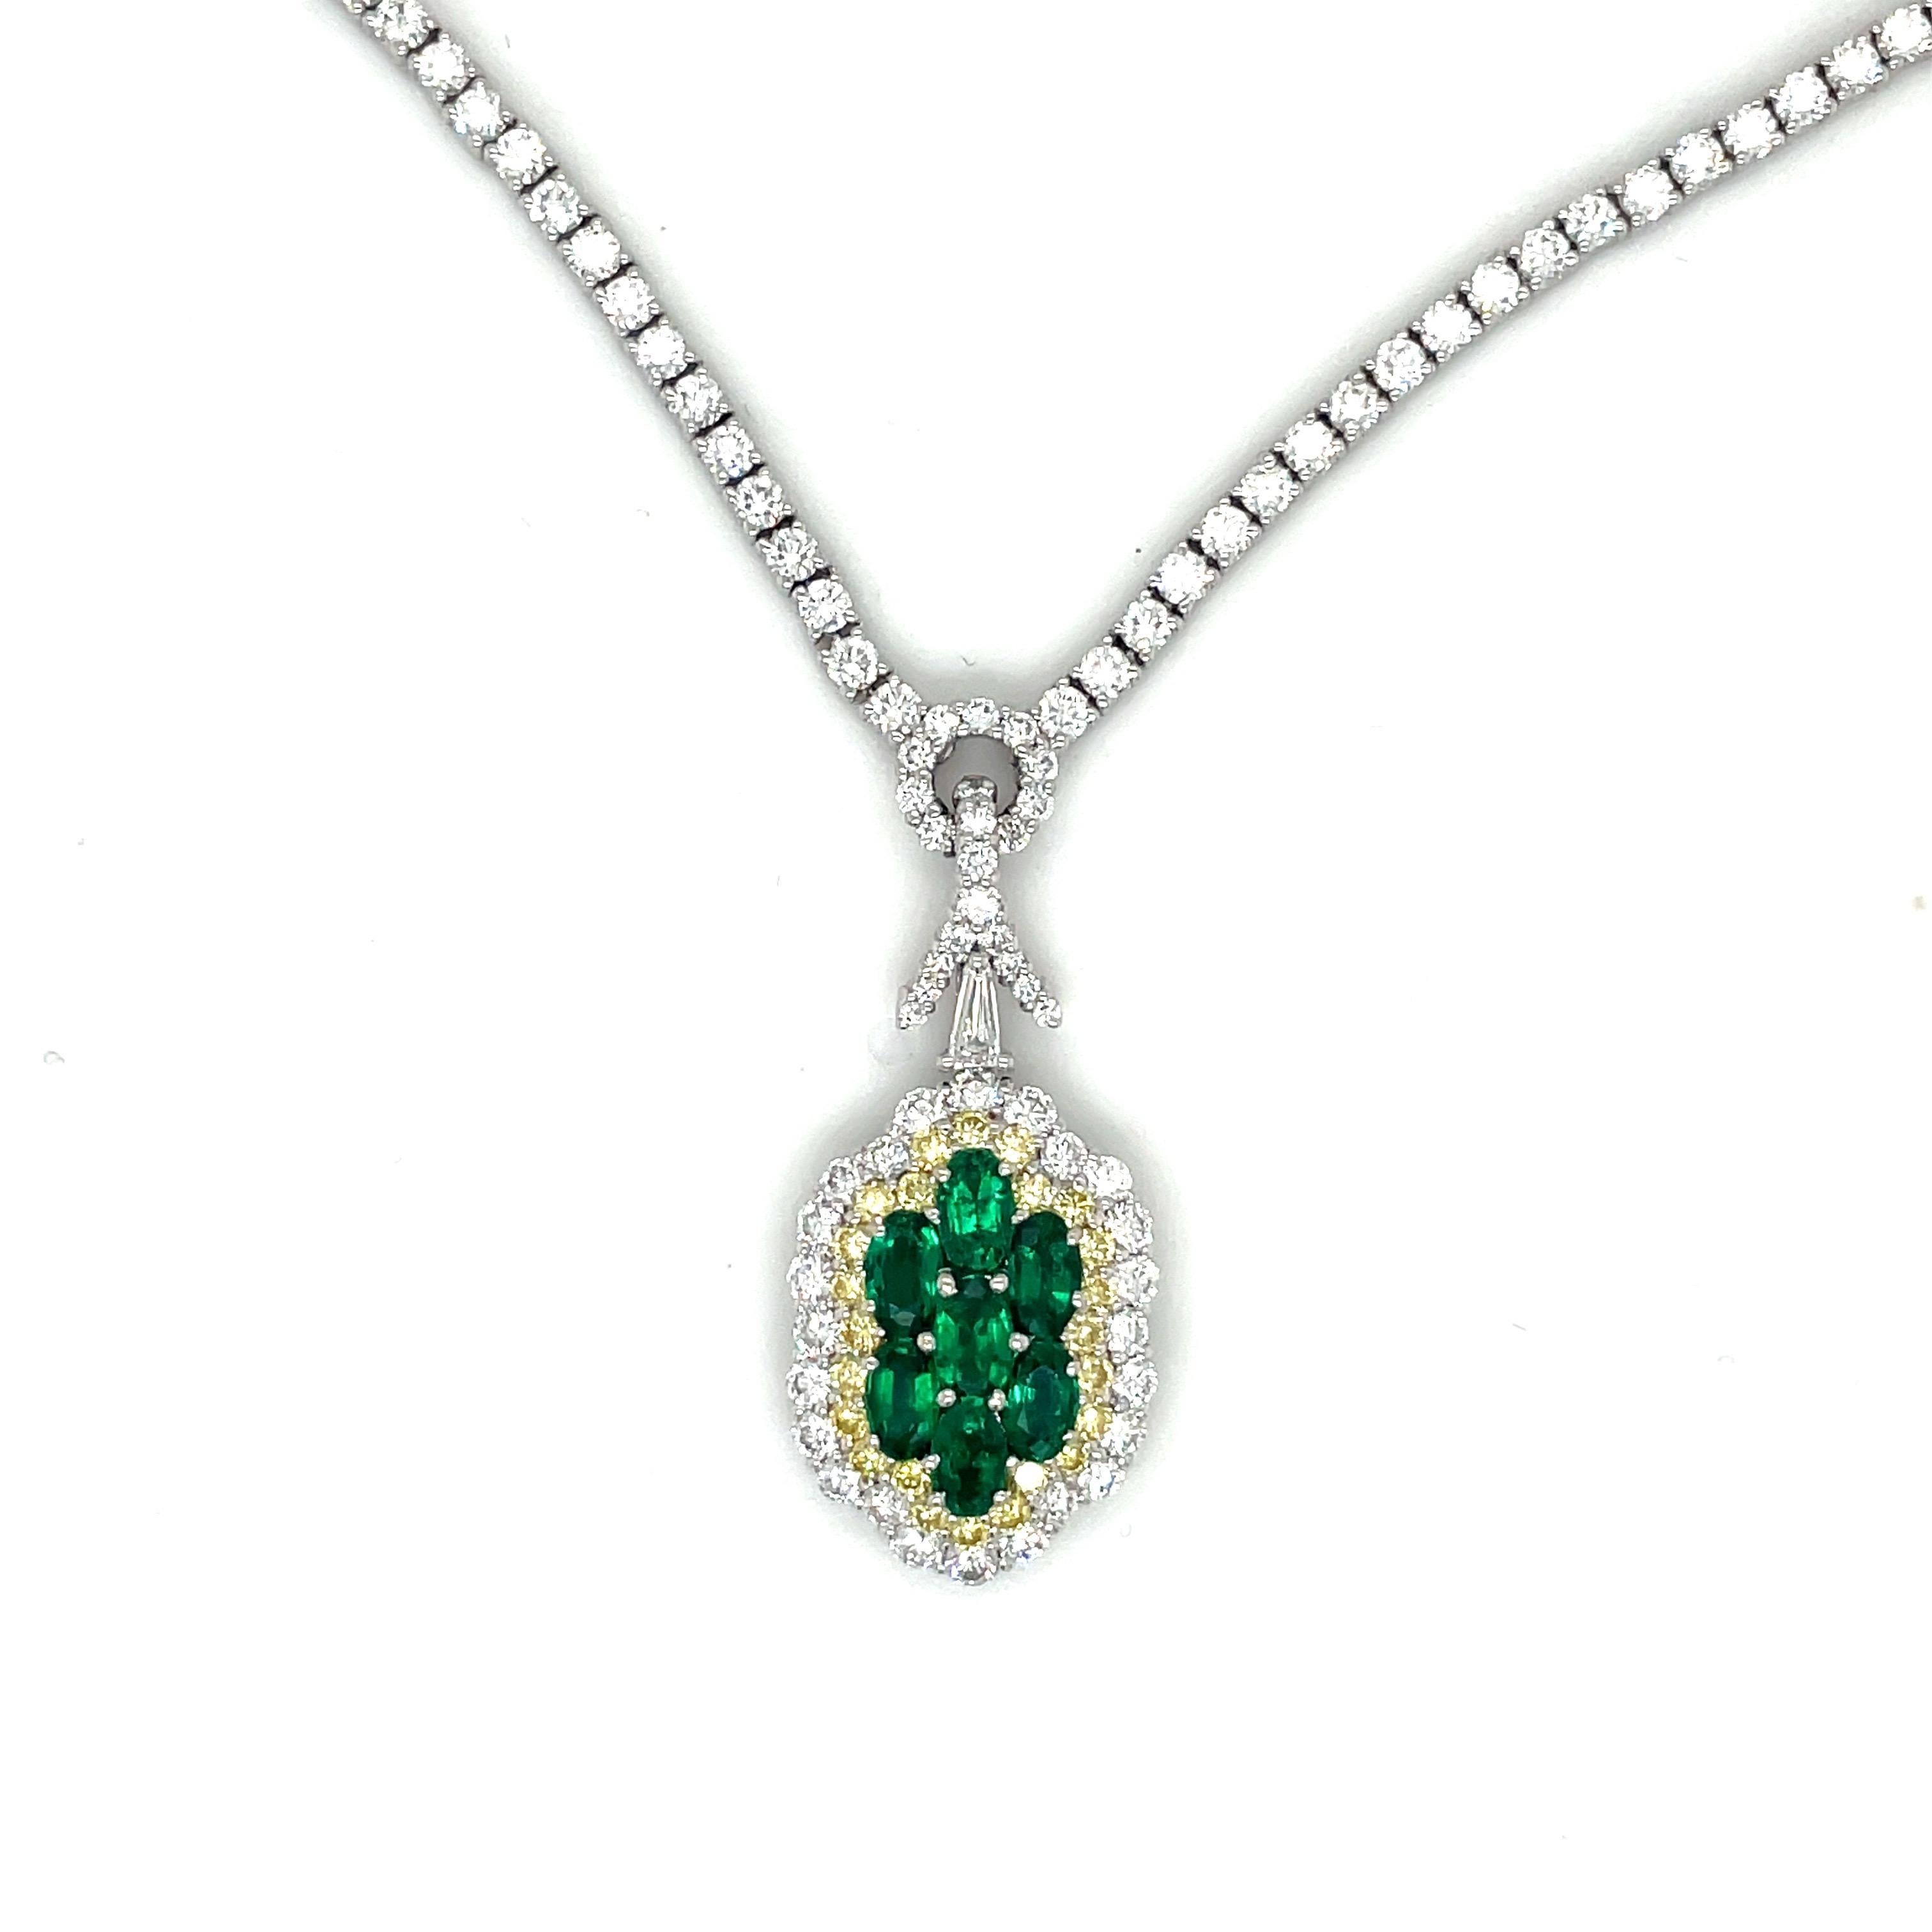 Contemporary Plat/18KT YG 7.80Ct Diamond Pendant Necklace 1.59CT Emerald .56Ct Yellow Diamond For Sale